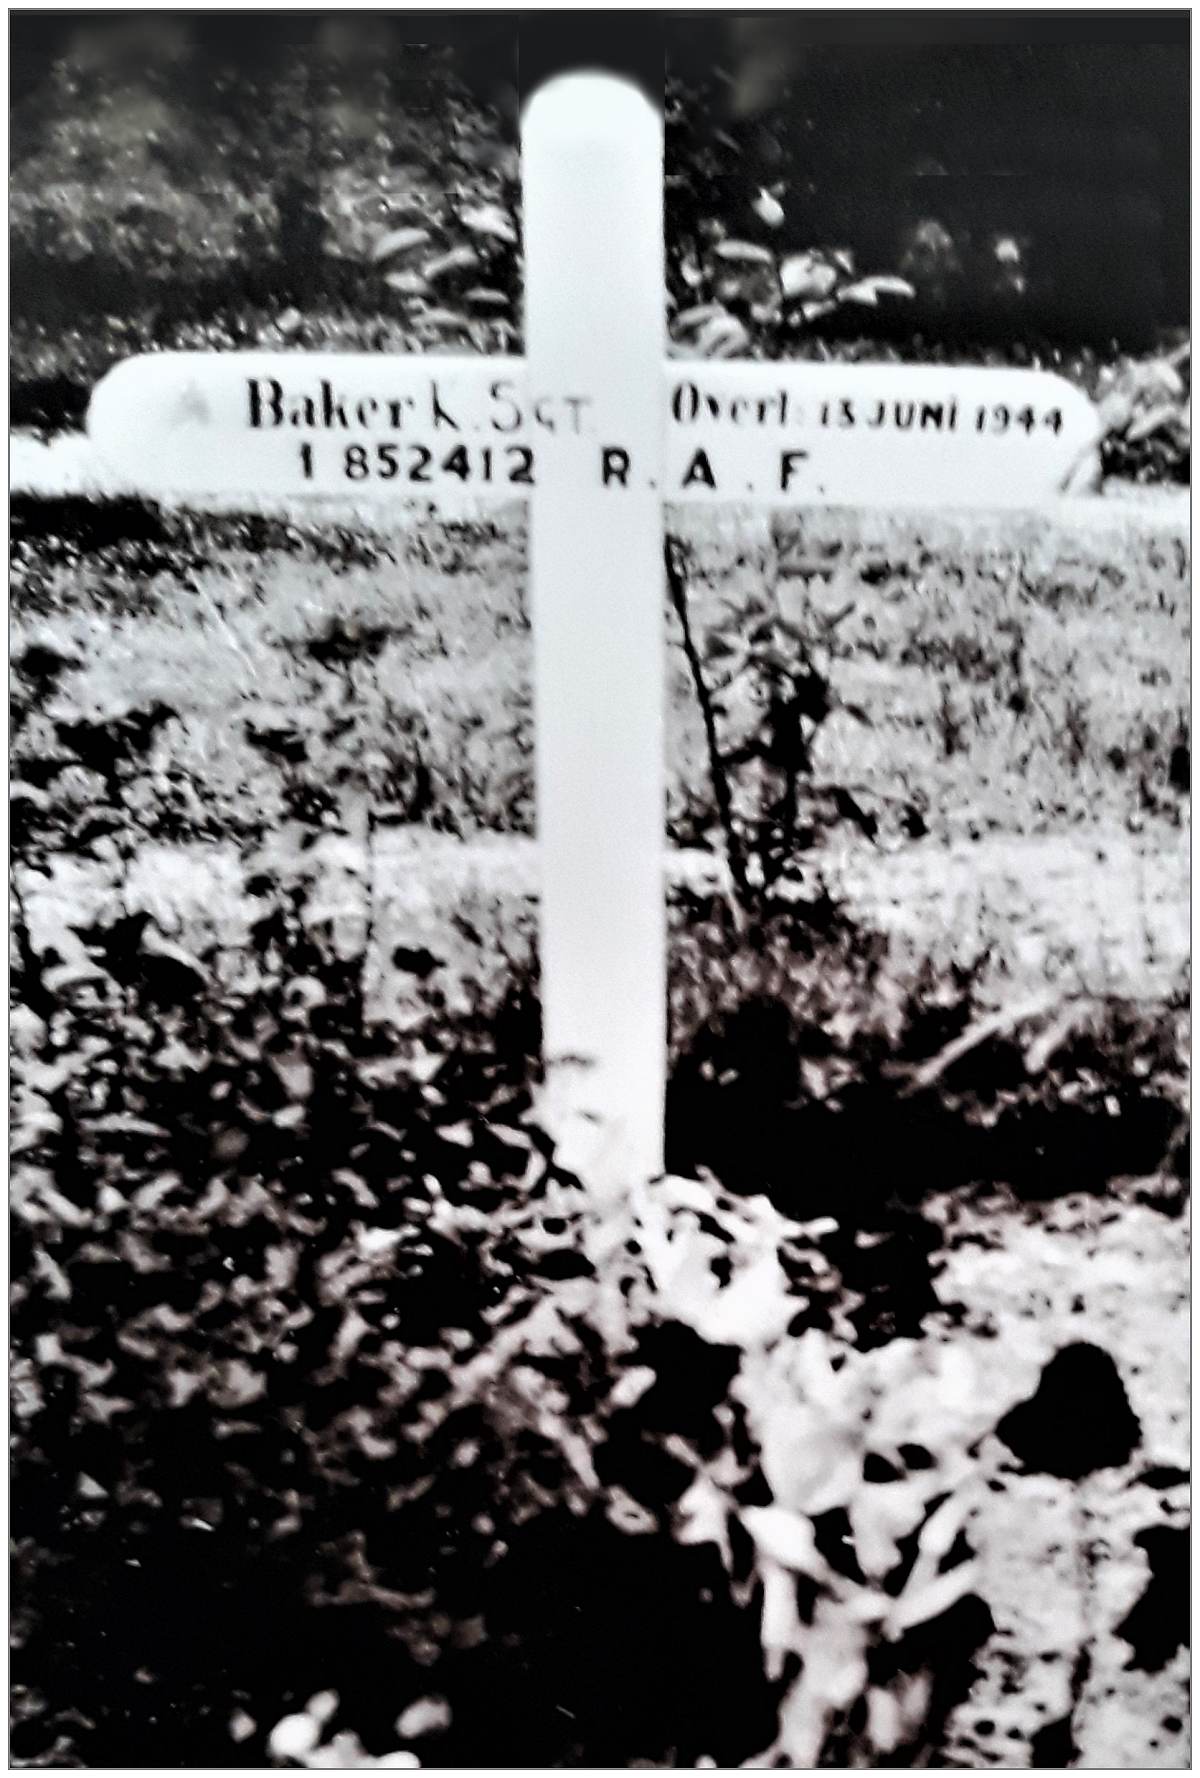 1852412 - Sergeant Keith Russell Baker - RAF - early grave marker - Nunspeet